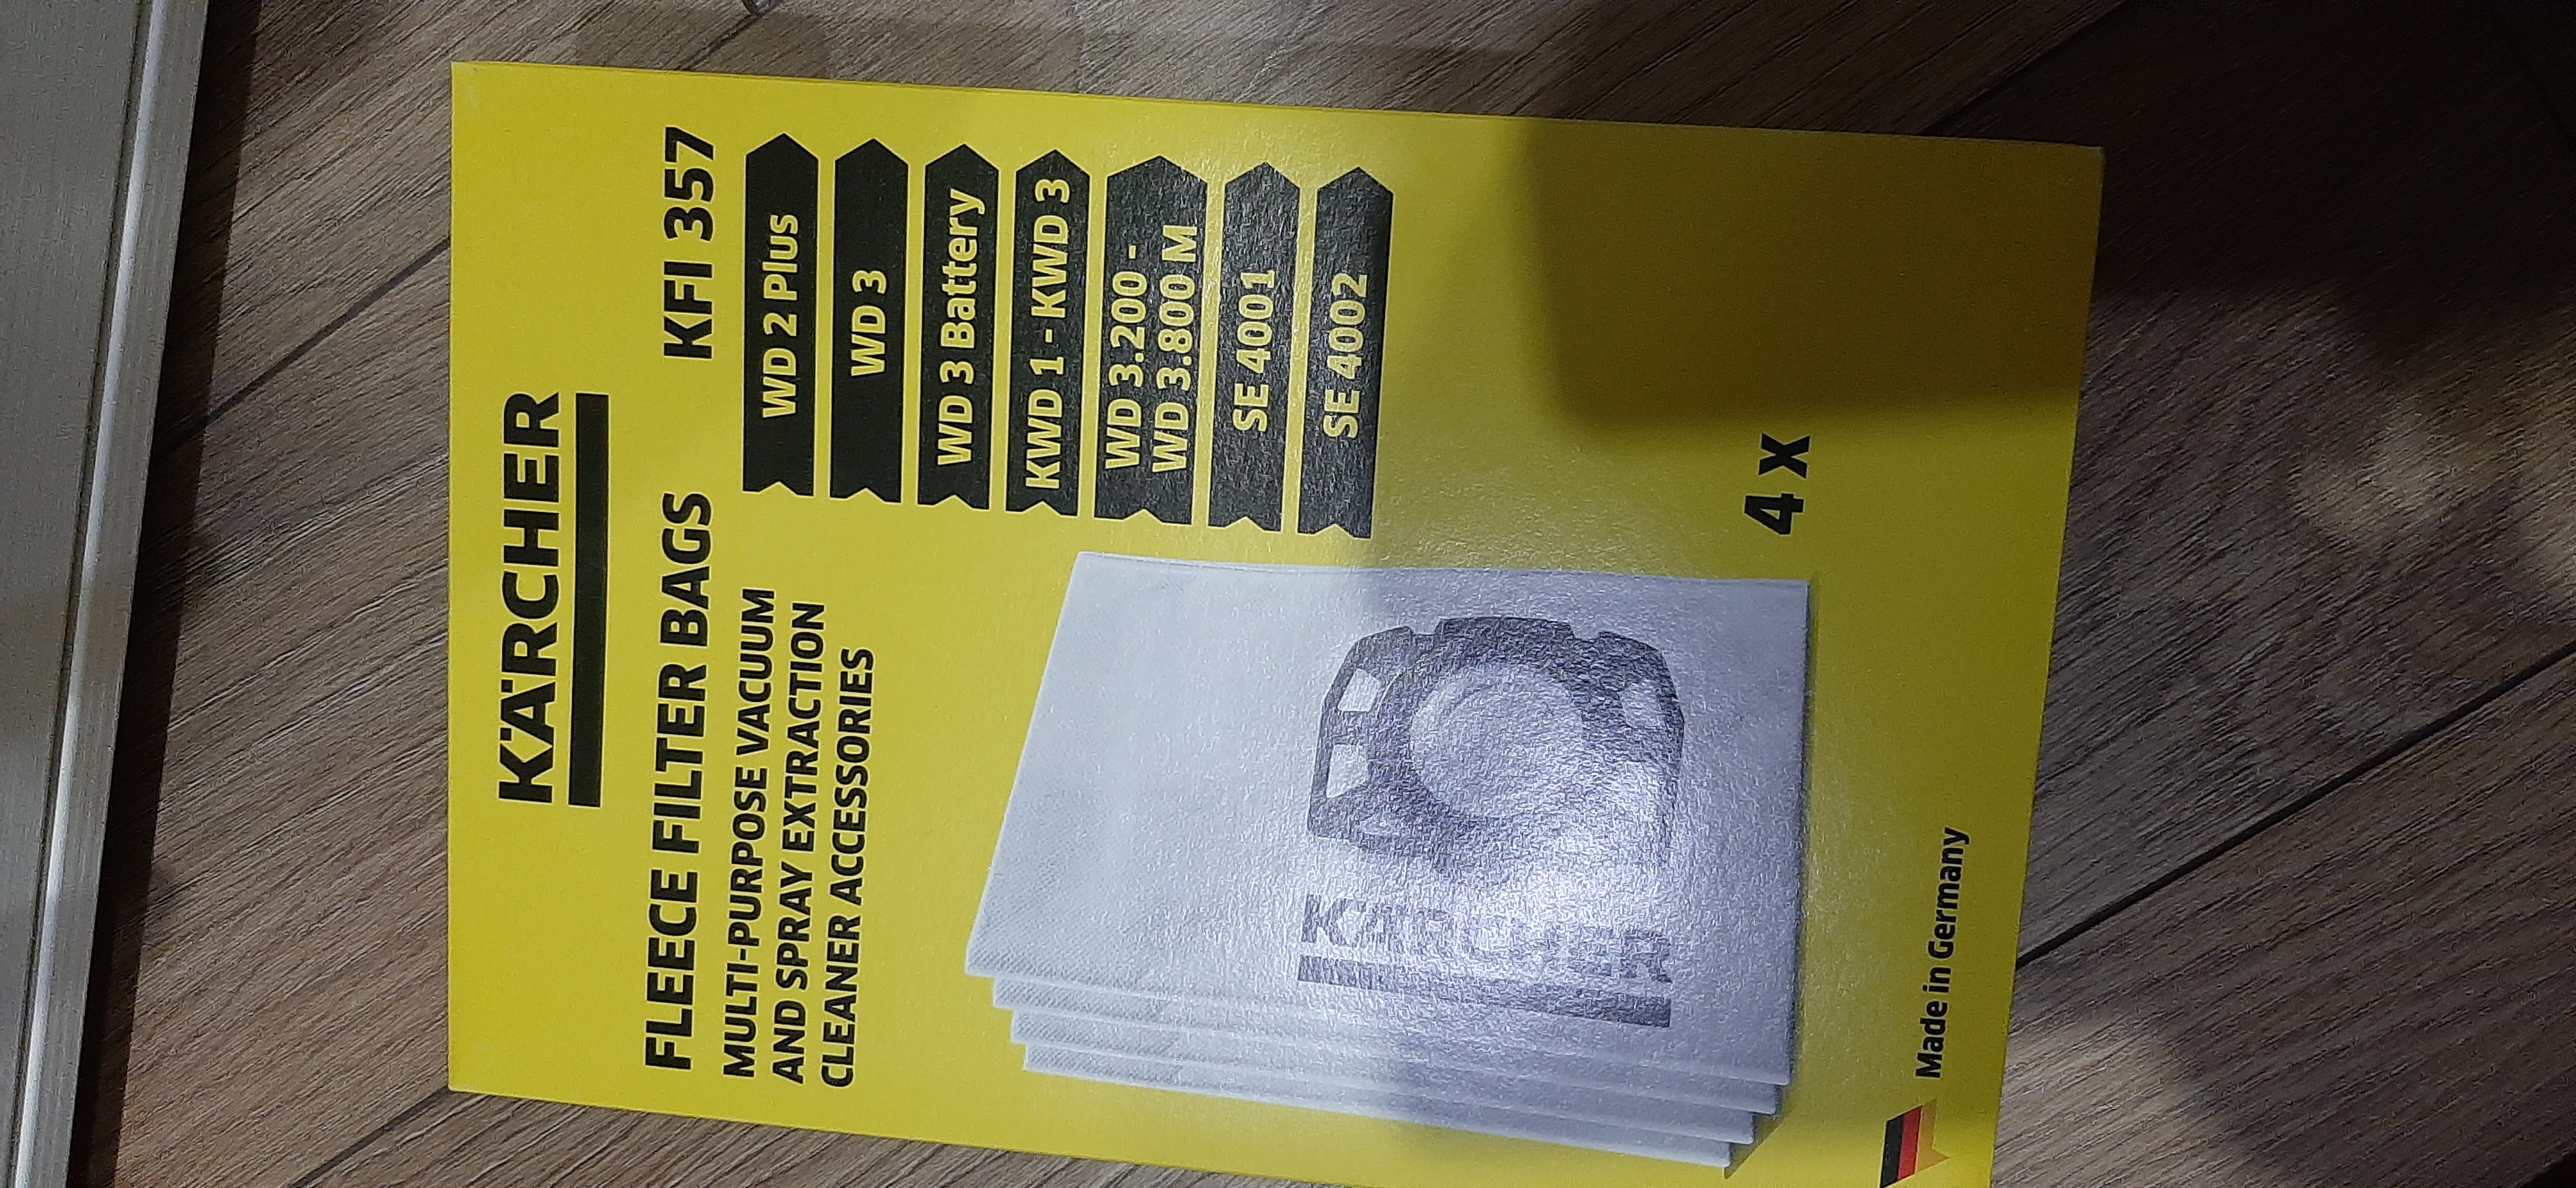 Karcher KFI 357 – Banknote интернет-магазин